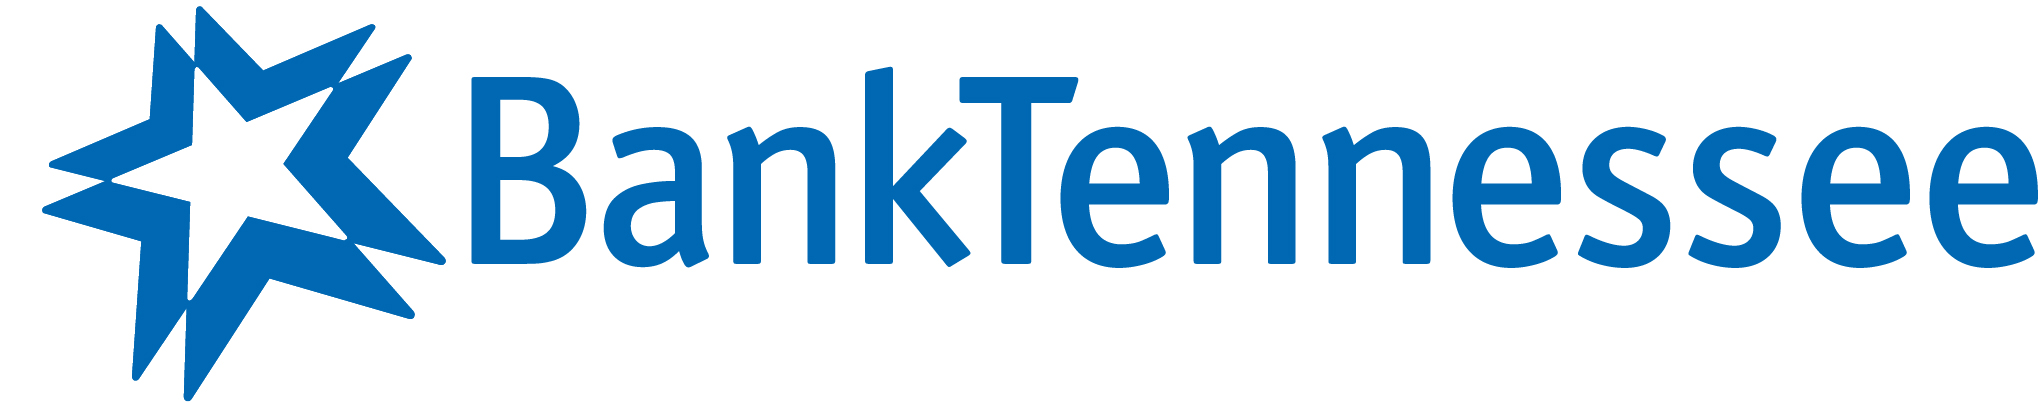 BankTennessee logo